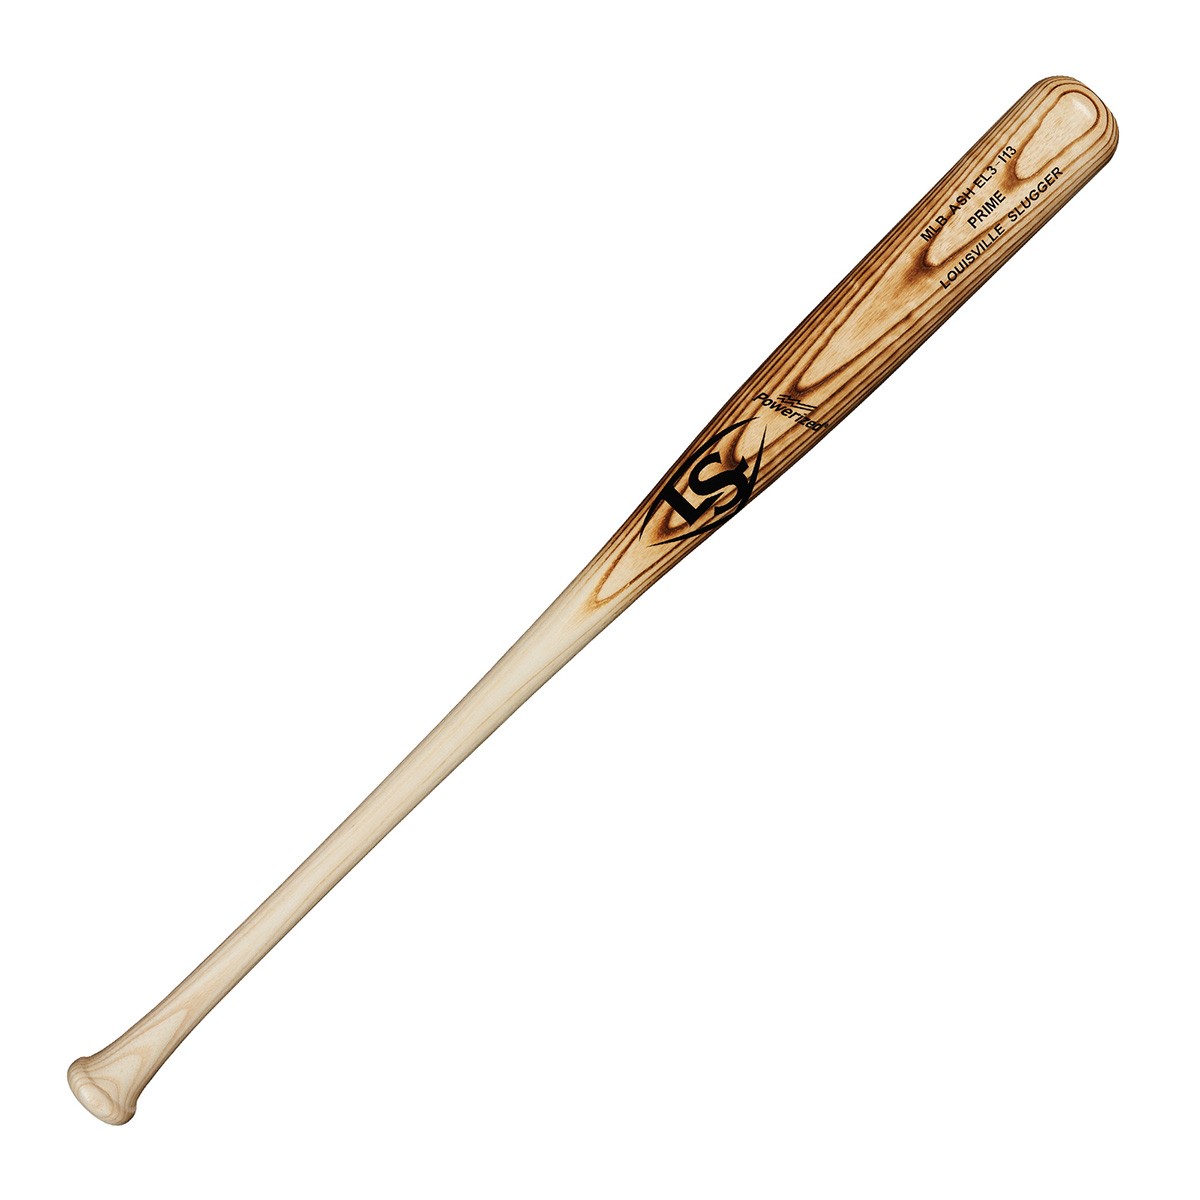 Maple Or Ash 1-32” Wooden Baseball Bat Blem Bat 